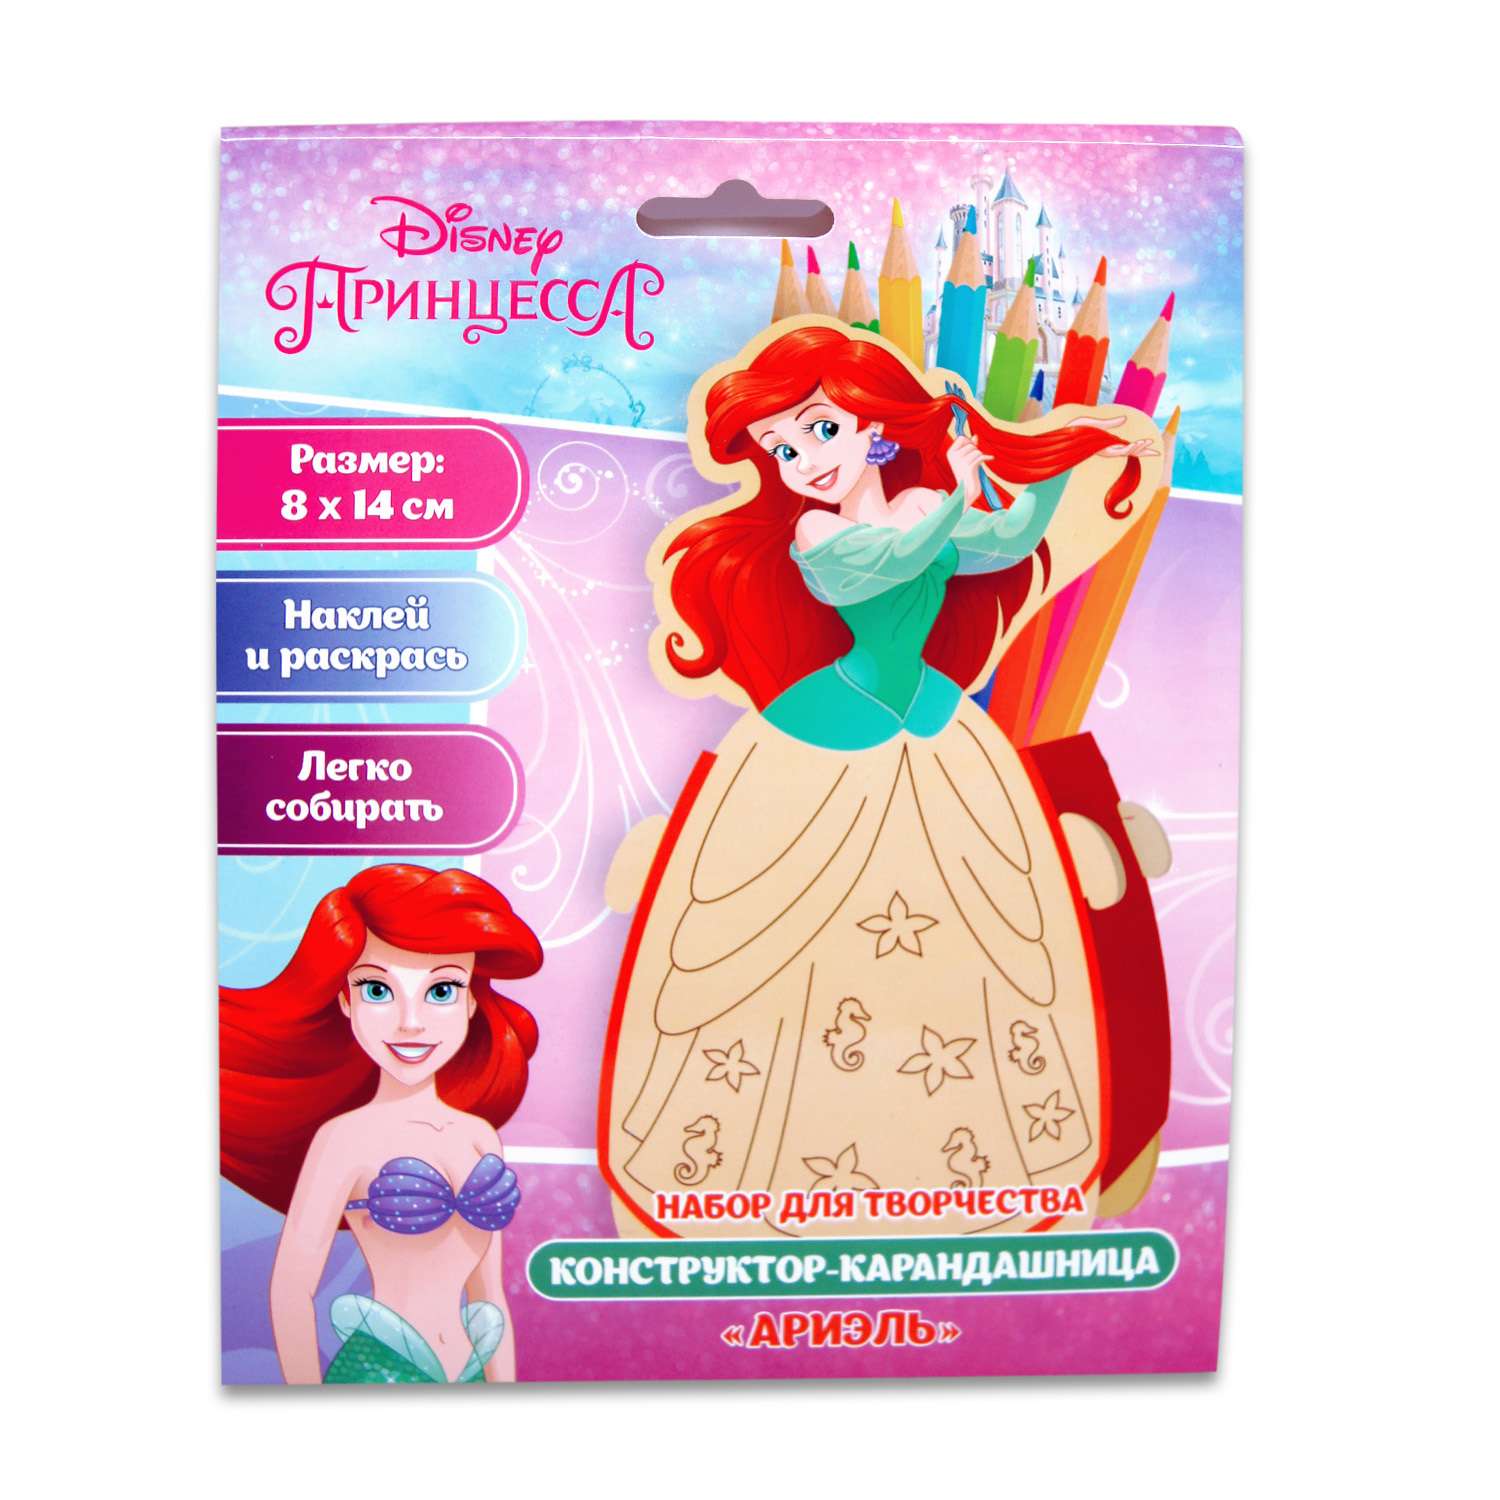 Набор для творчества IQ Format Принцессы Disney Карандашница Ариэль 67806 - фото 2